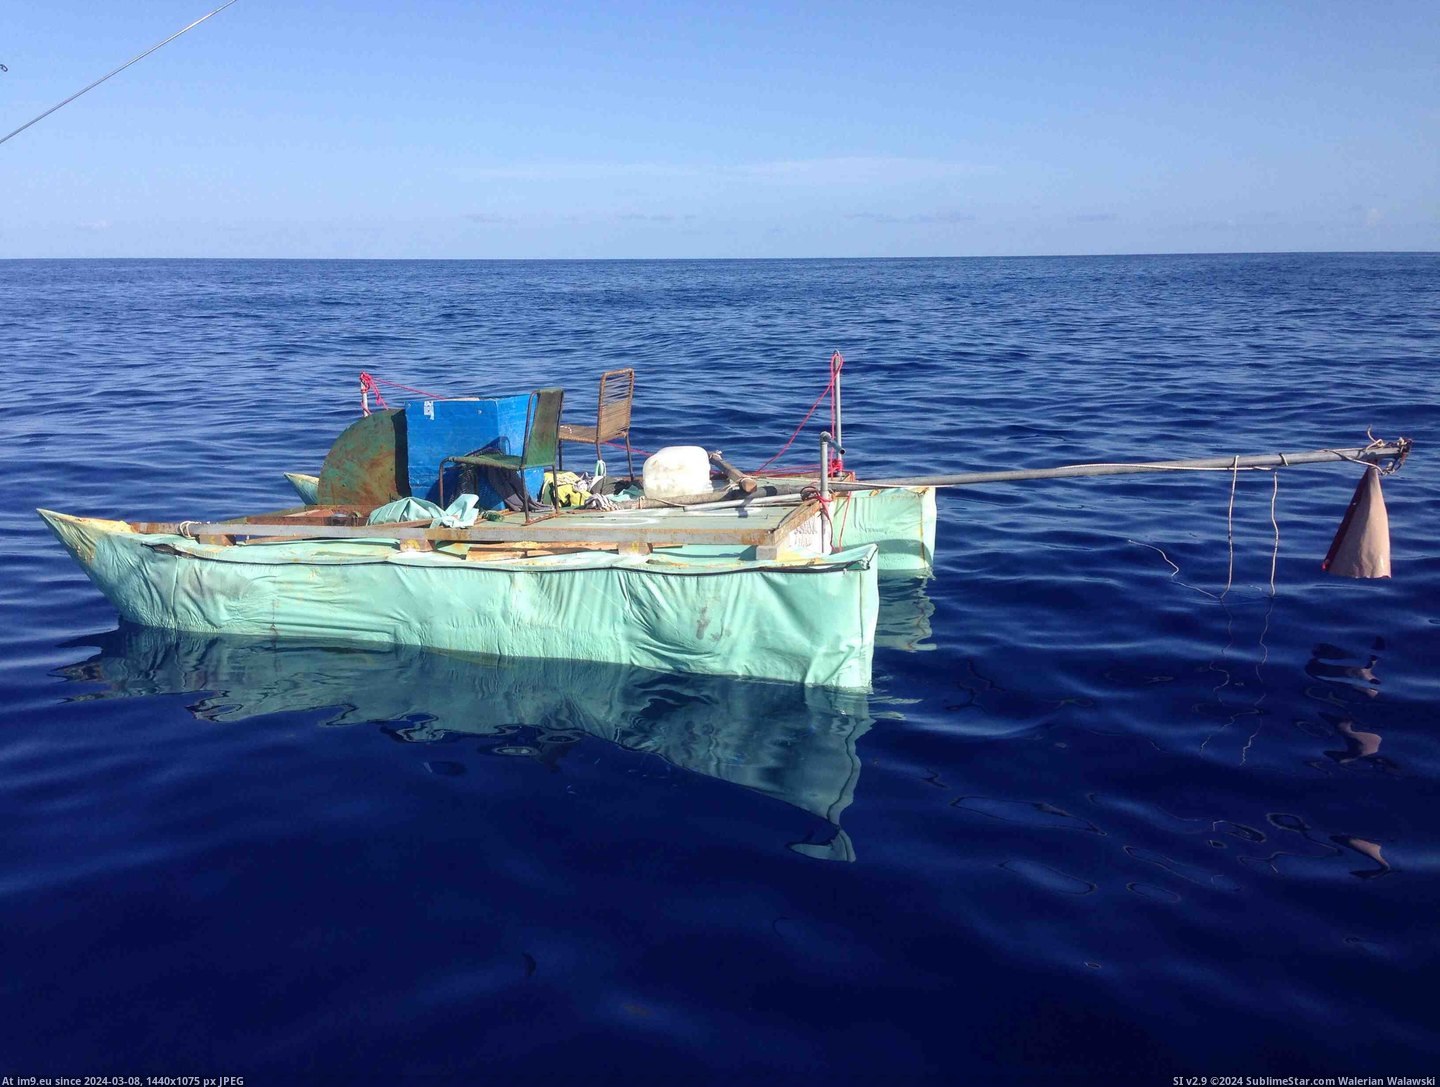 #Sea #Abandoned #Cuban #Fishing #Raft [Pics] While fishing, we found an abandoned Cuban raft while at sea. Pic. (Obraz z album My r/PICS favs))